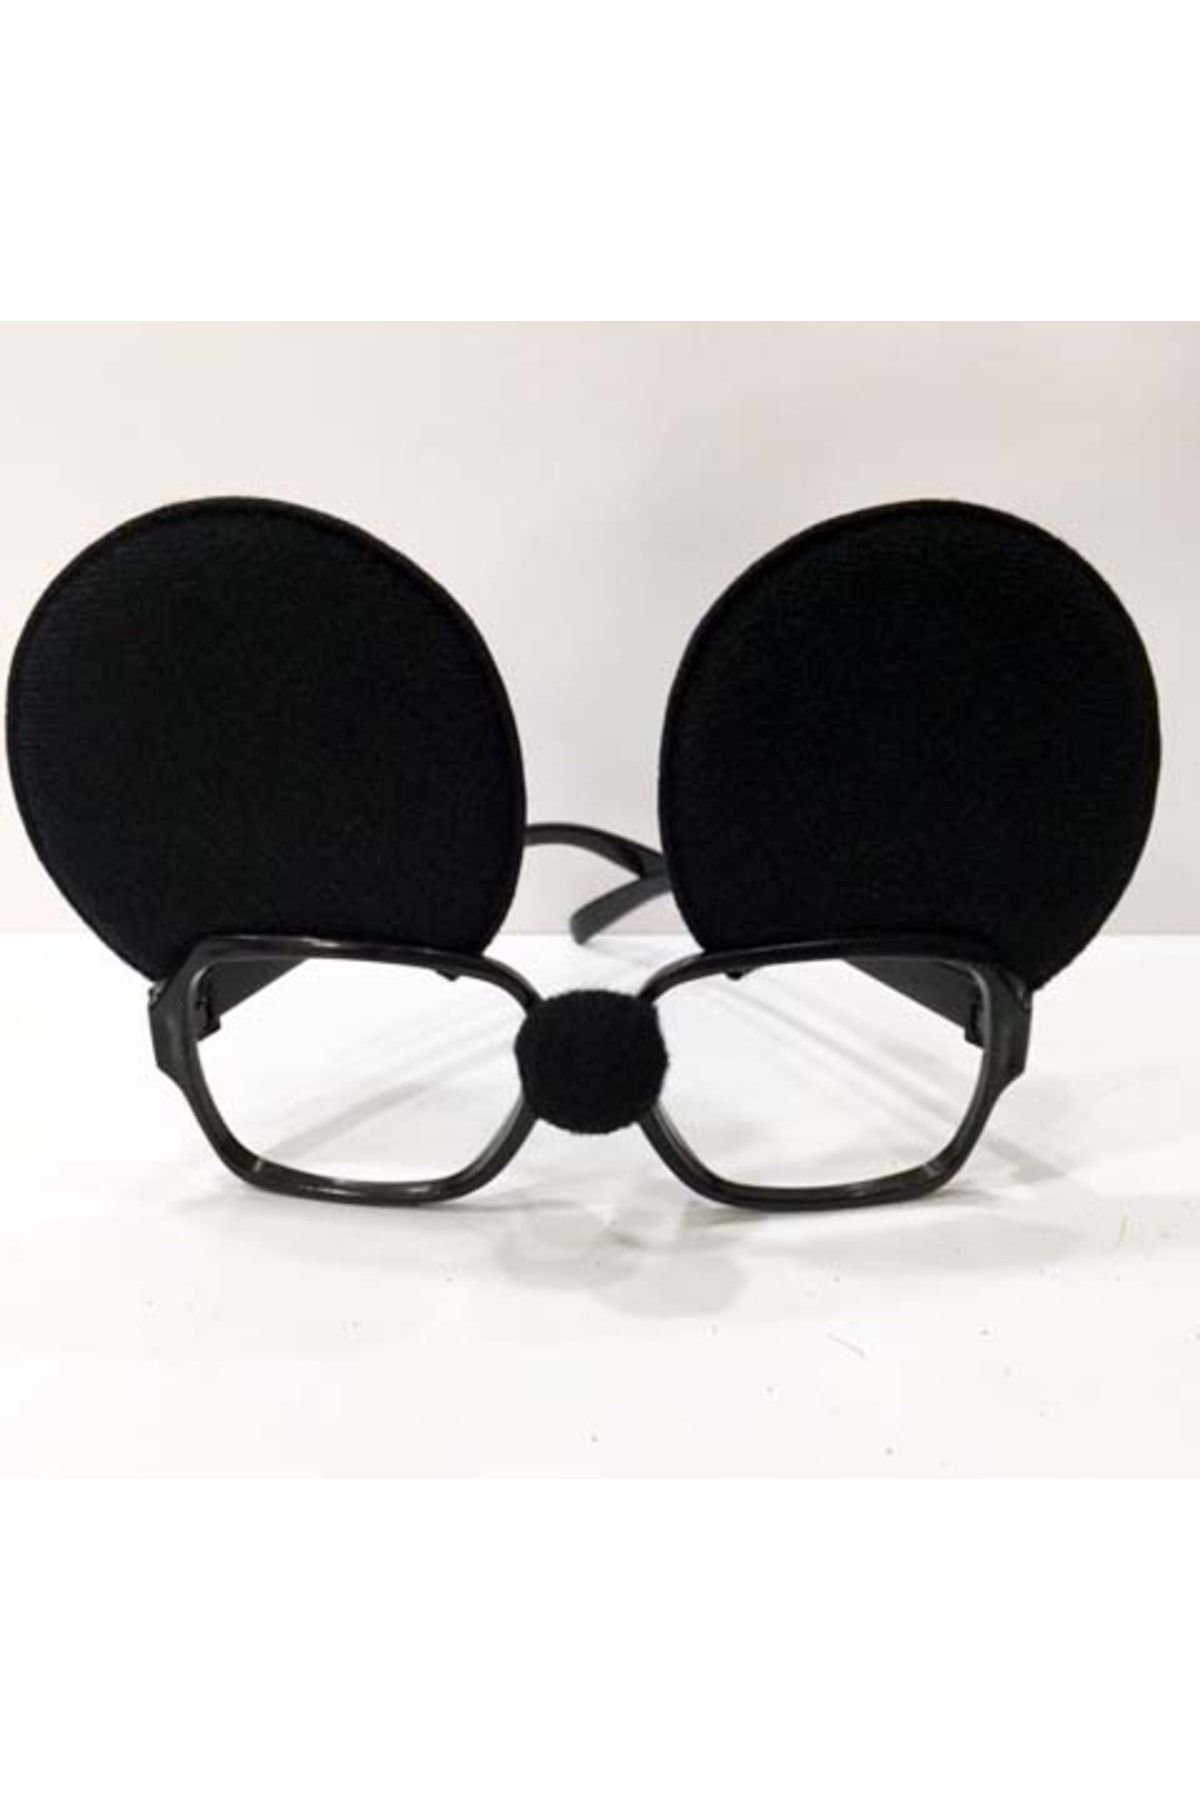 MCEM STORE Mickey Mouse Gözlüğü